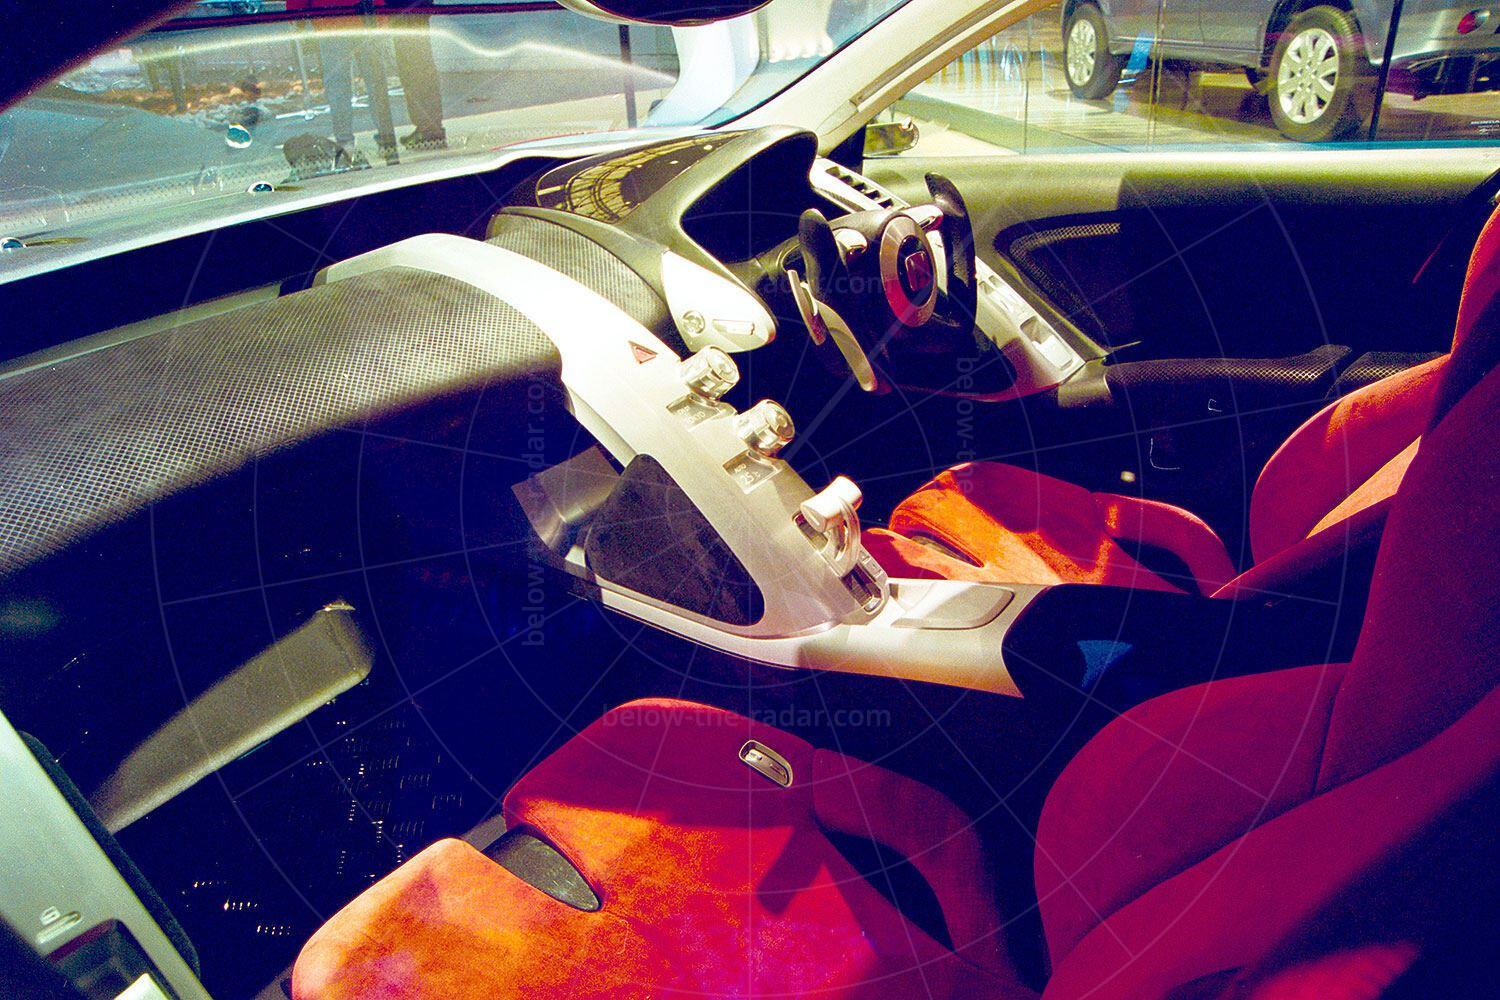 Honda Dualnote concept interior Pic: Honda | Honda Dualnote concept interior